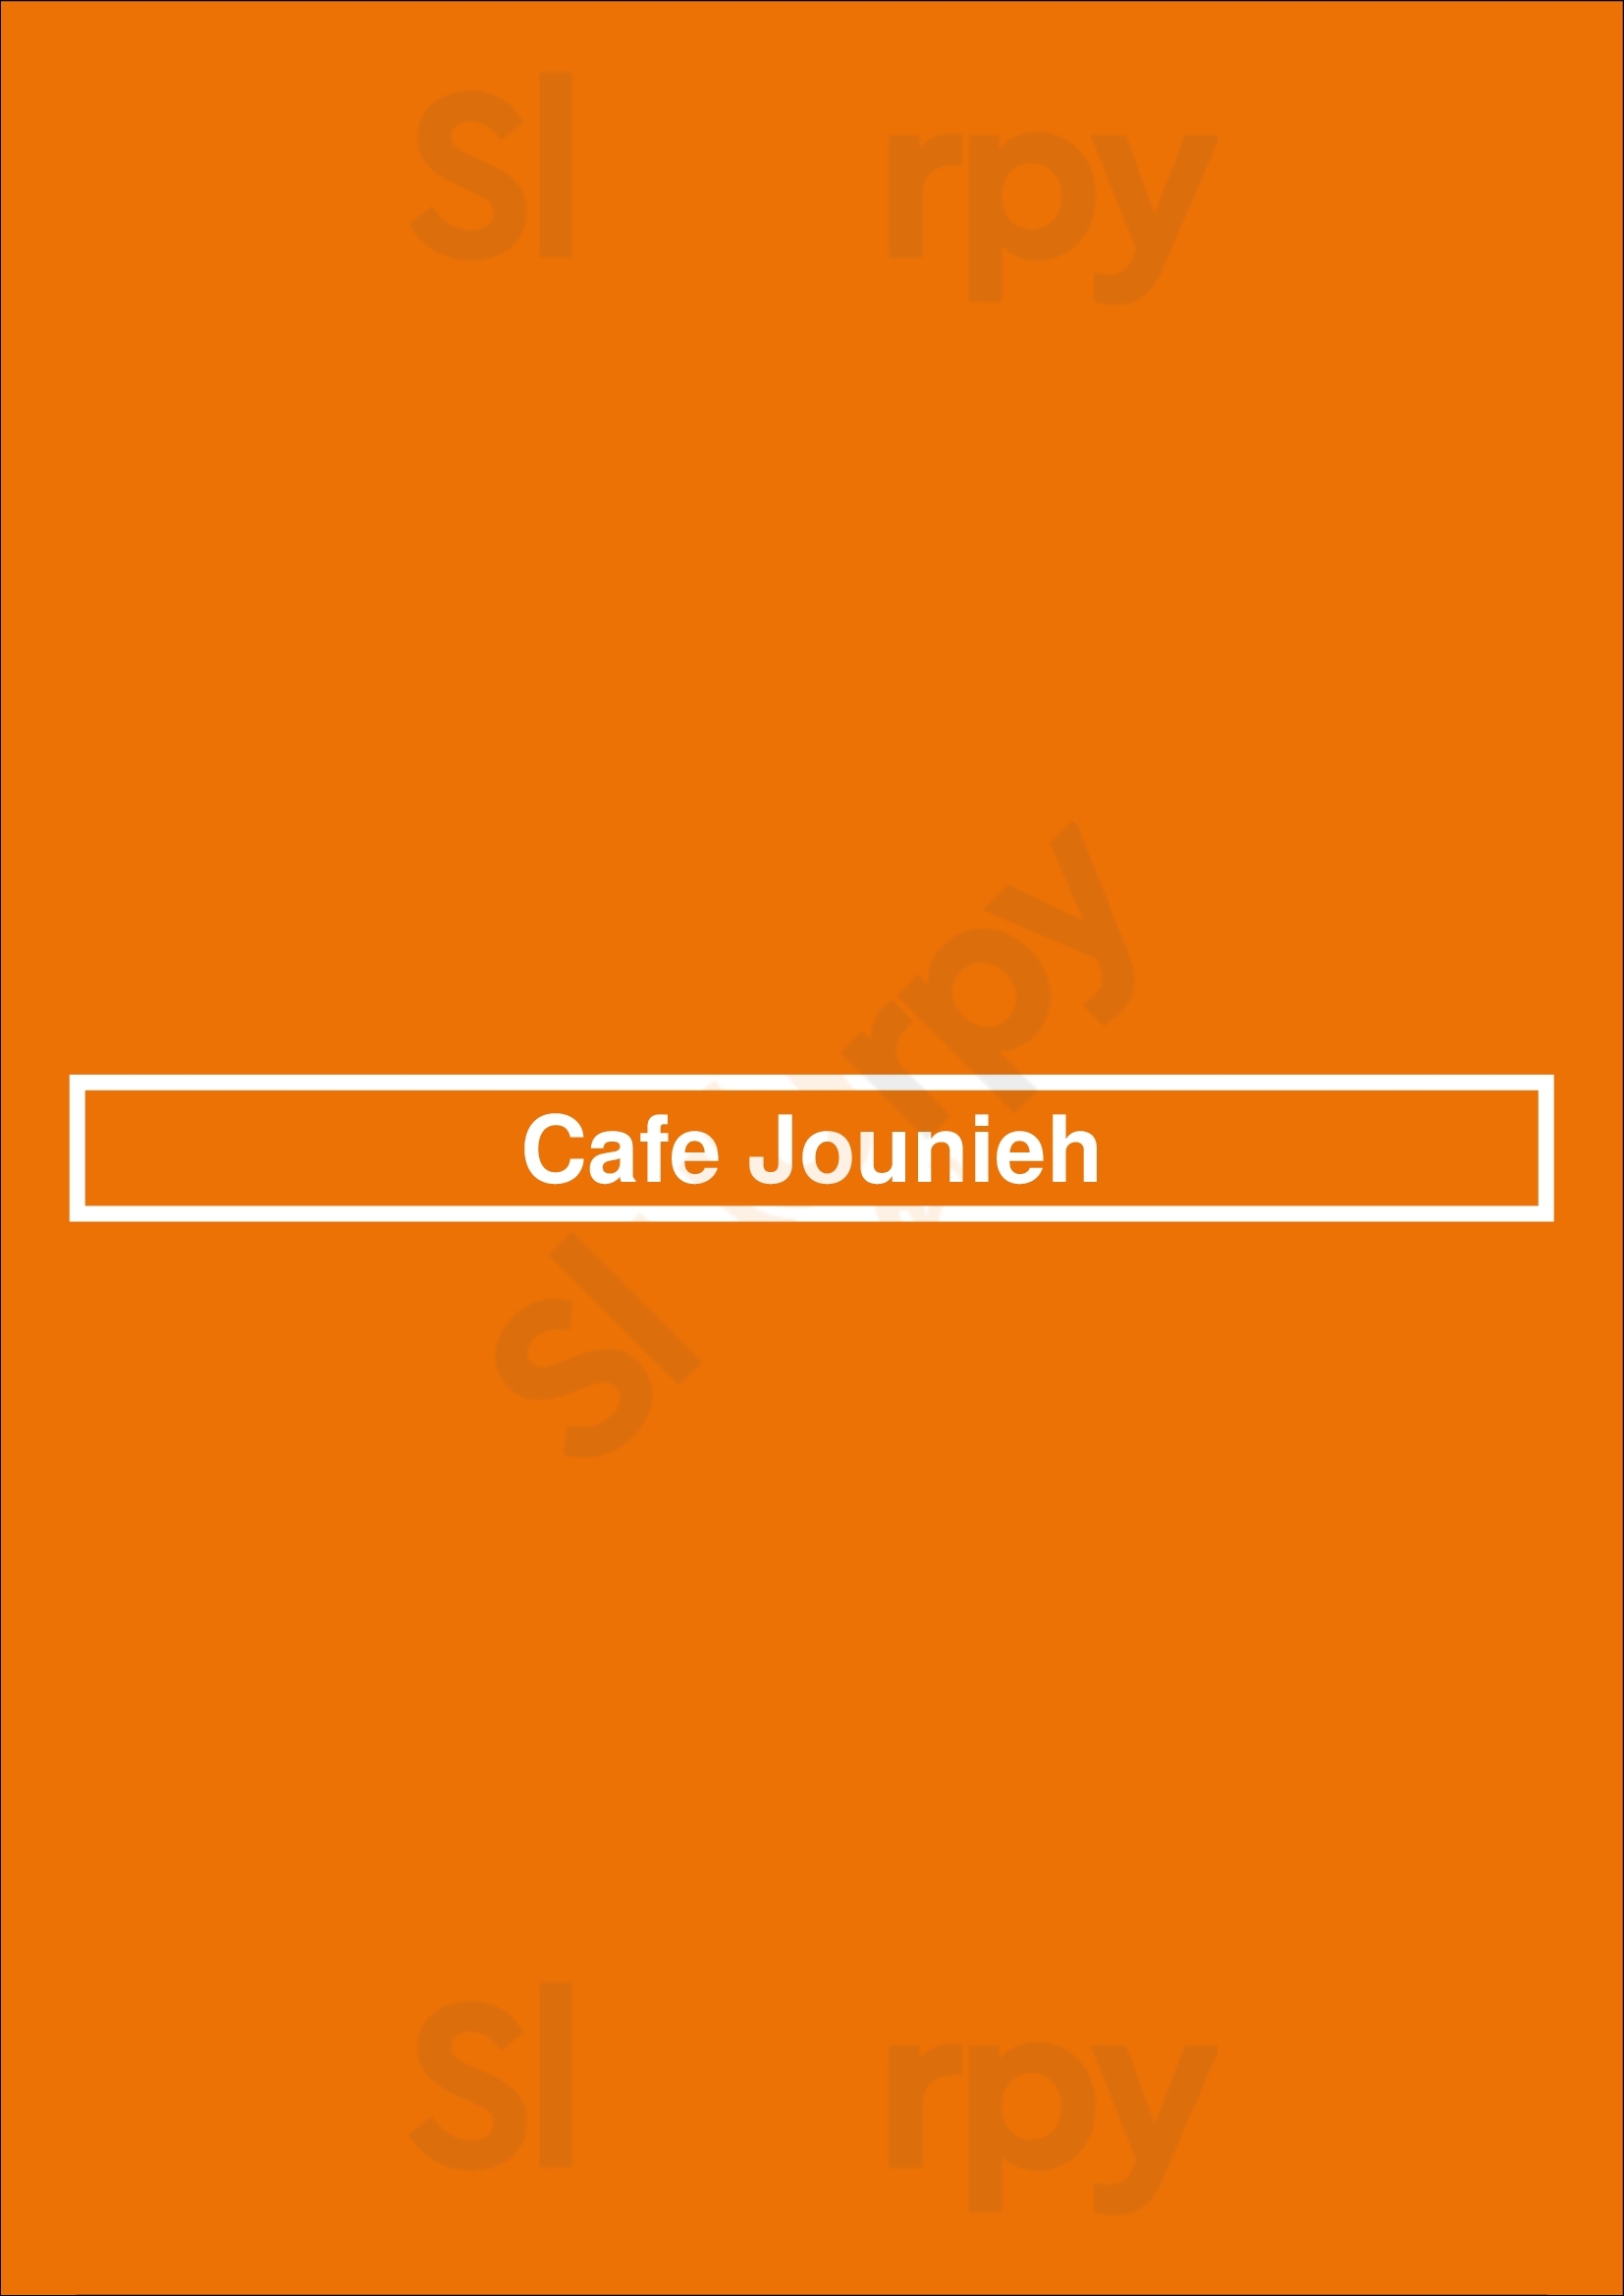 Cafe Jounieh Montreal Menu - 1